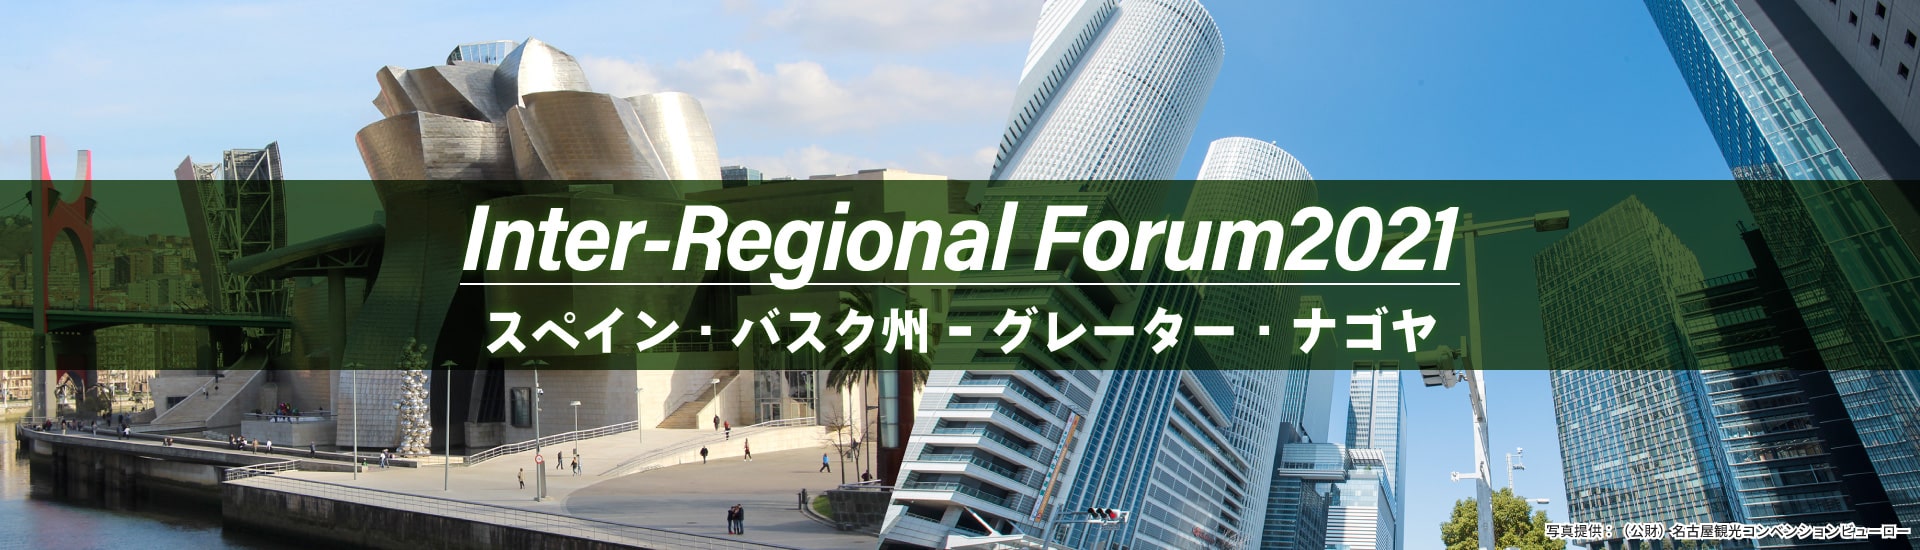 Inter-Regional Forum2021 バスク自治州 – グレーター・ナゴヤ